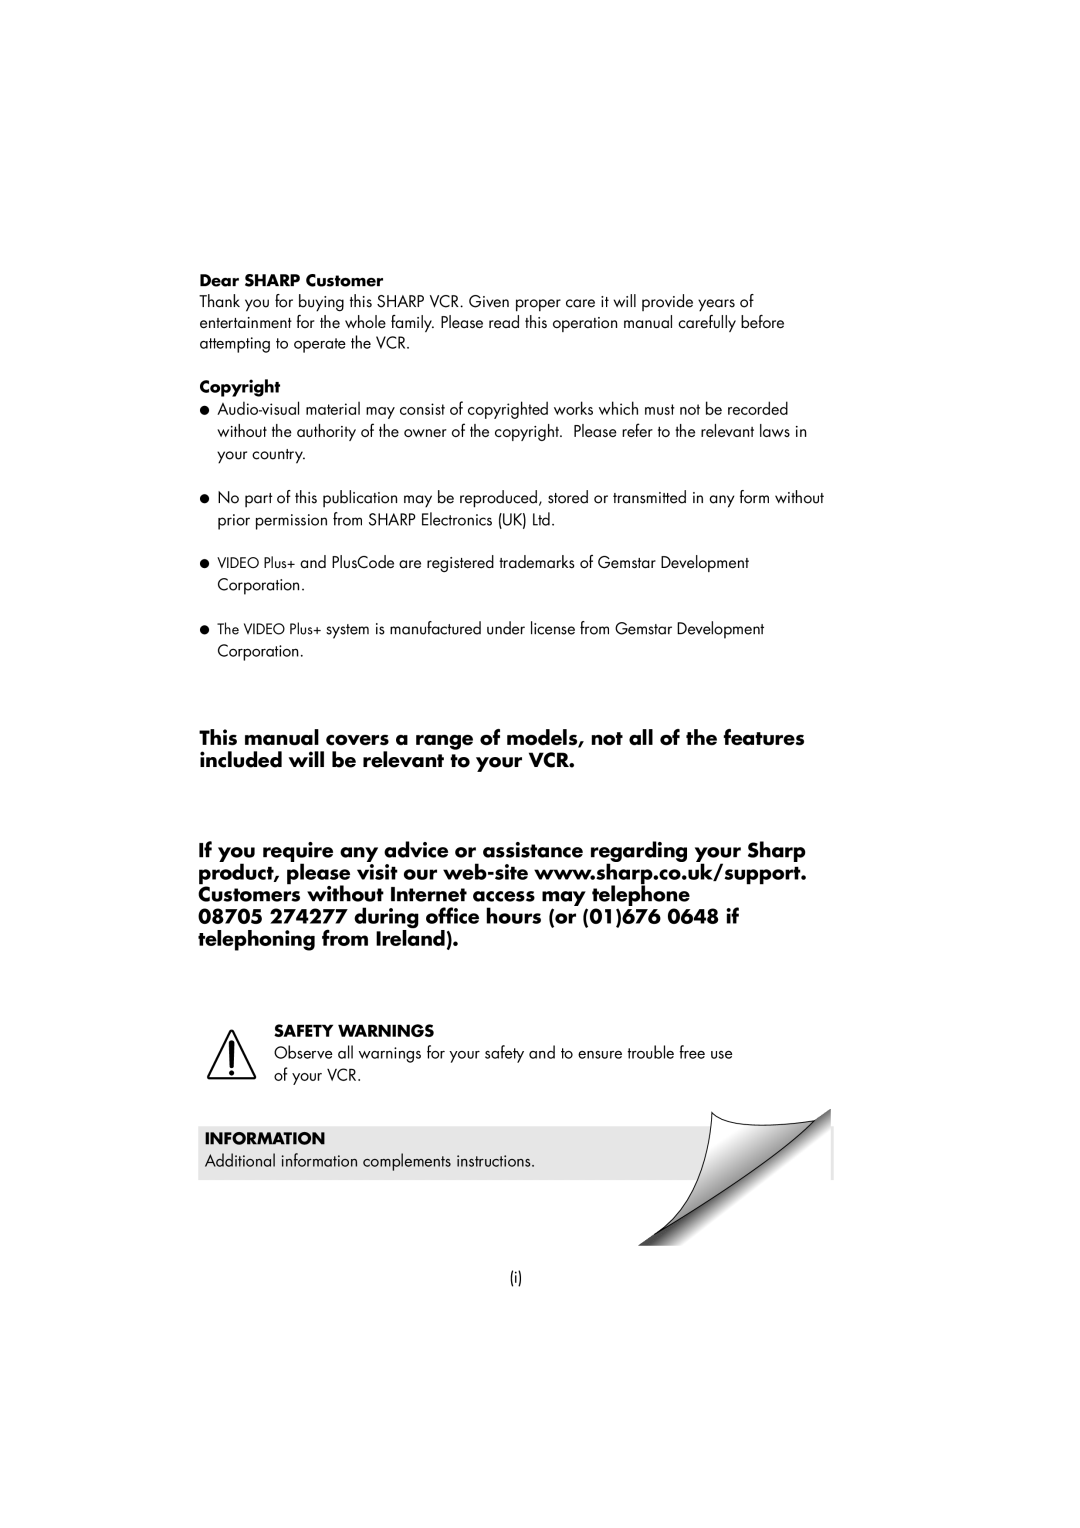 Sharp VC-MH715HM operation manual Dear SHARP Customer, Copyright, Safety Warnings, Information 